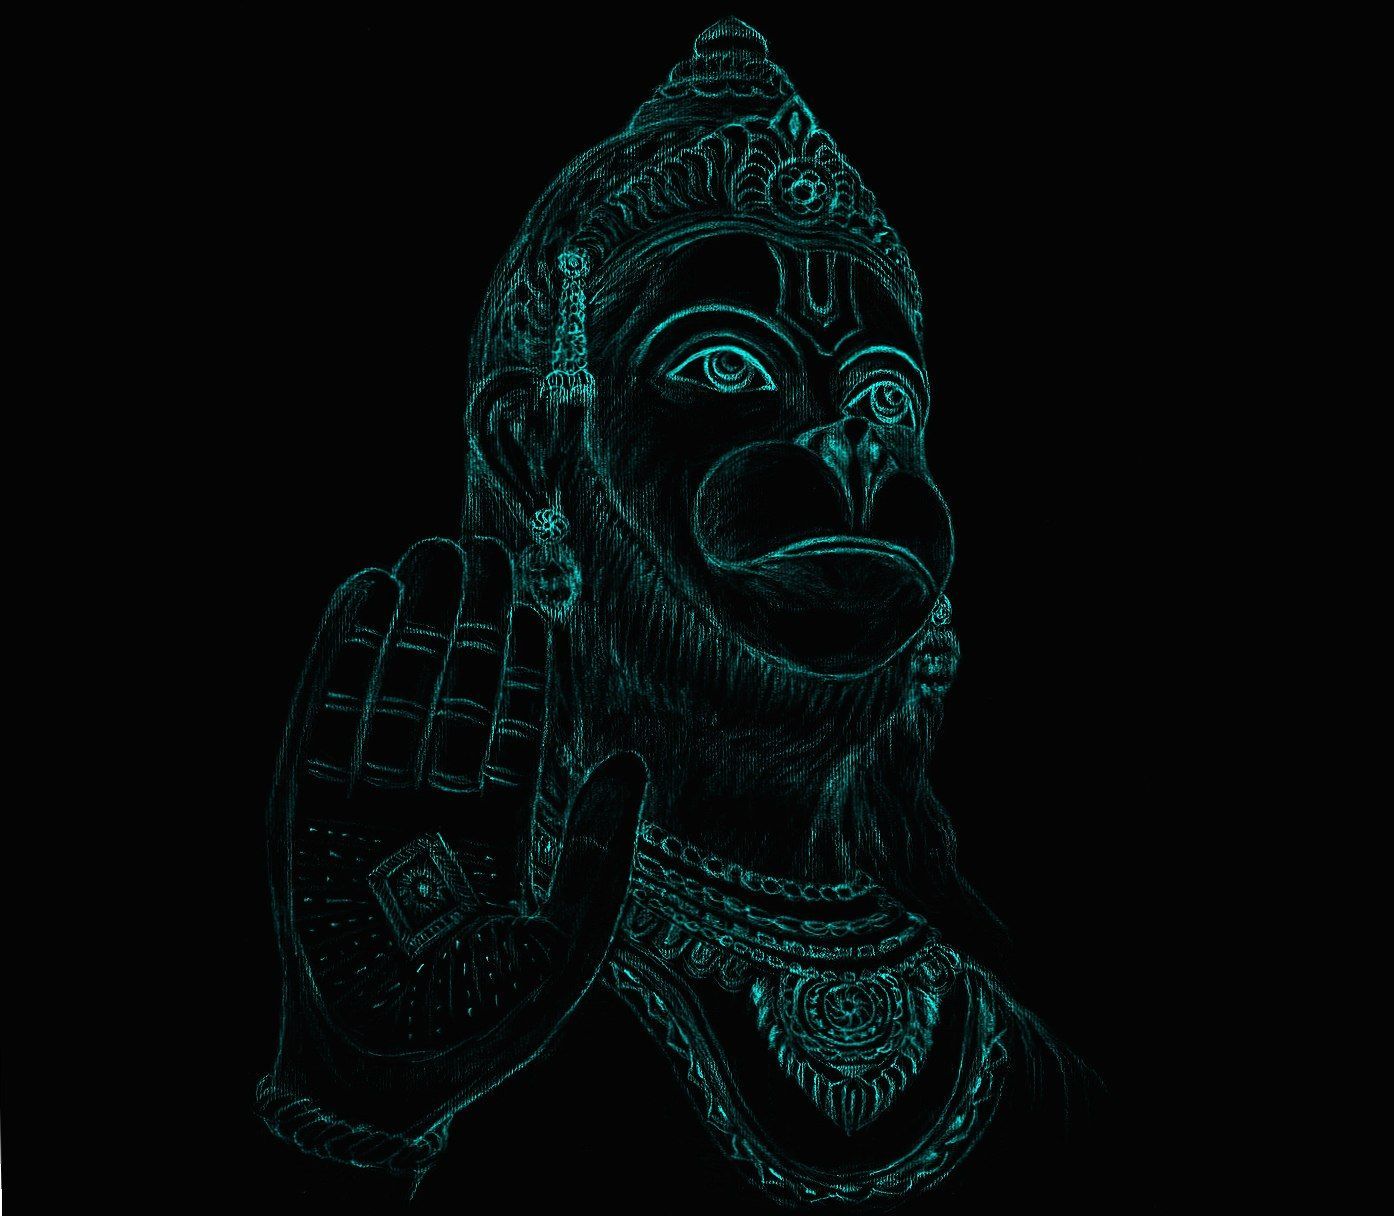 Hanuman Ji Pics HD Wallpaper Free Download - Om Reels